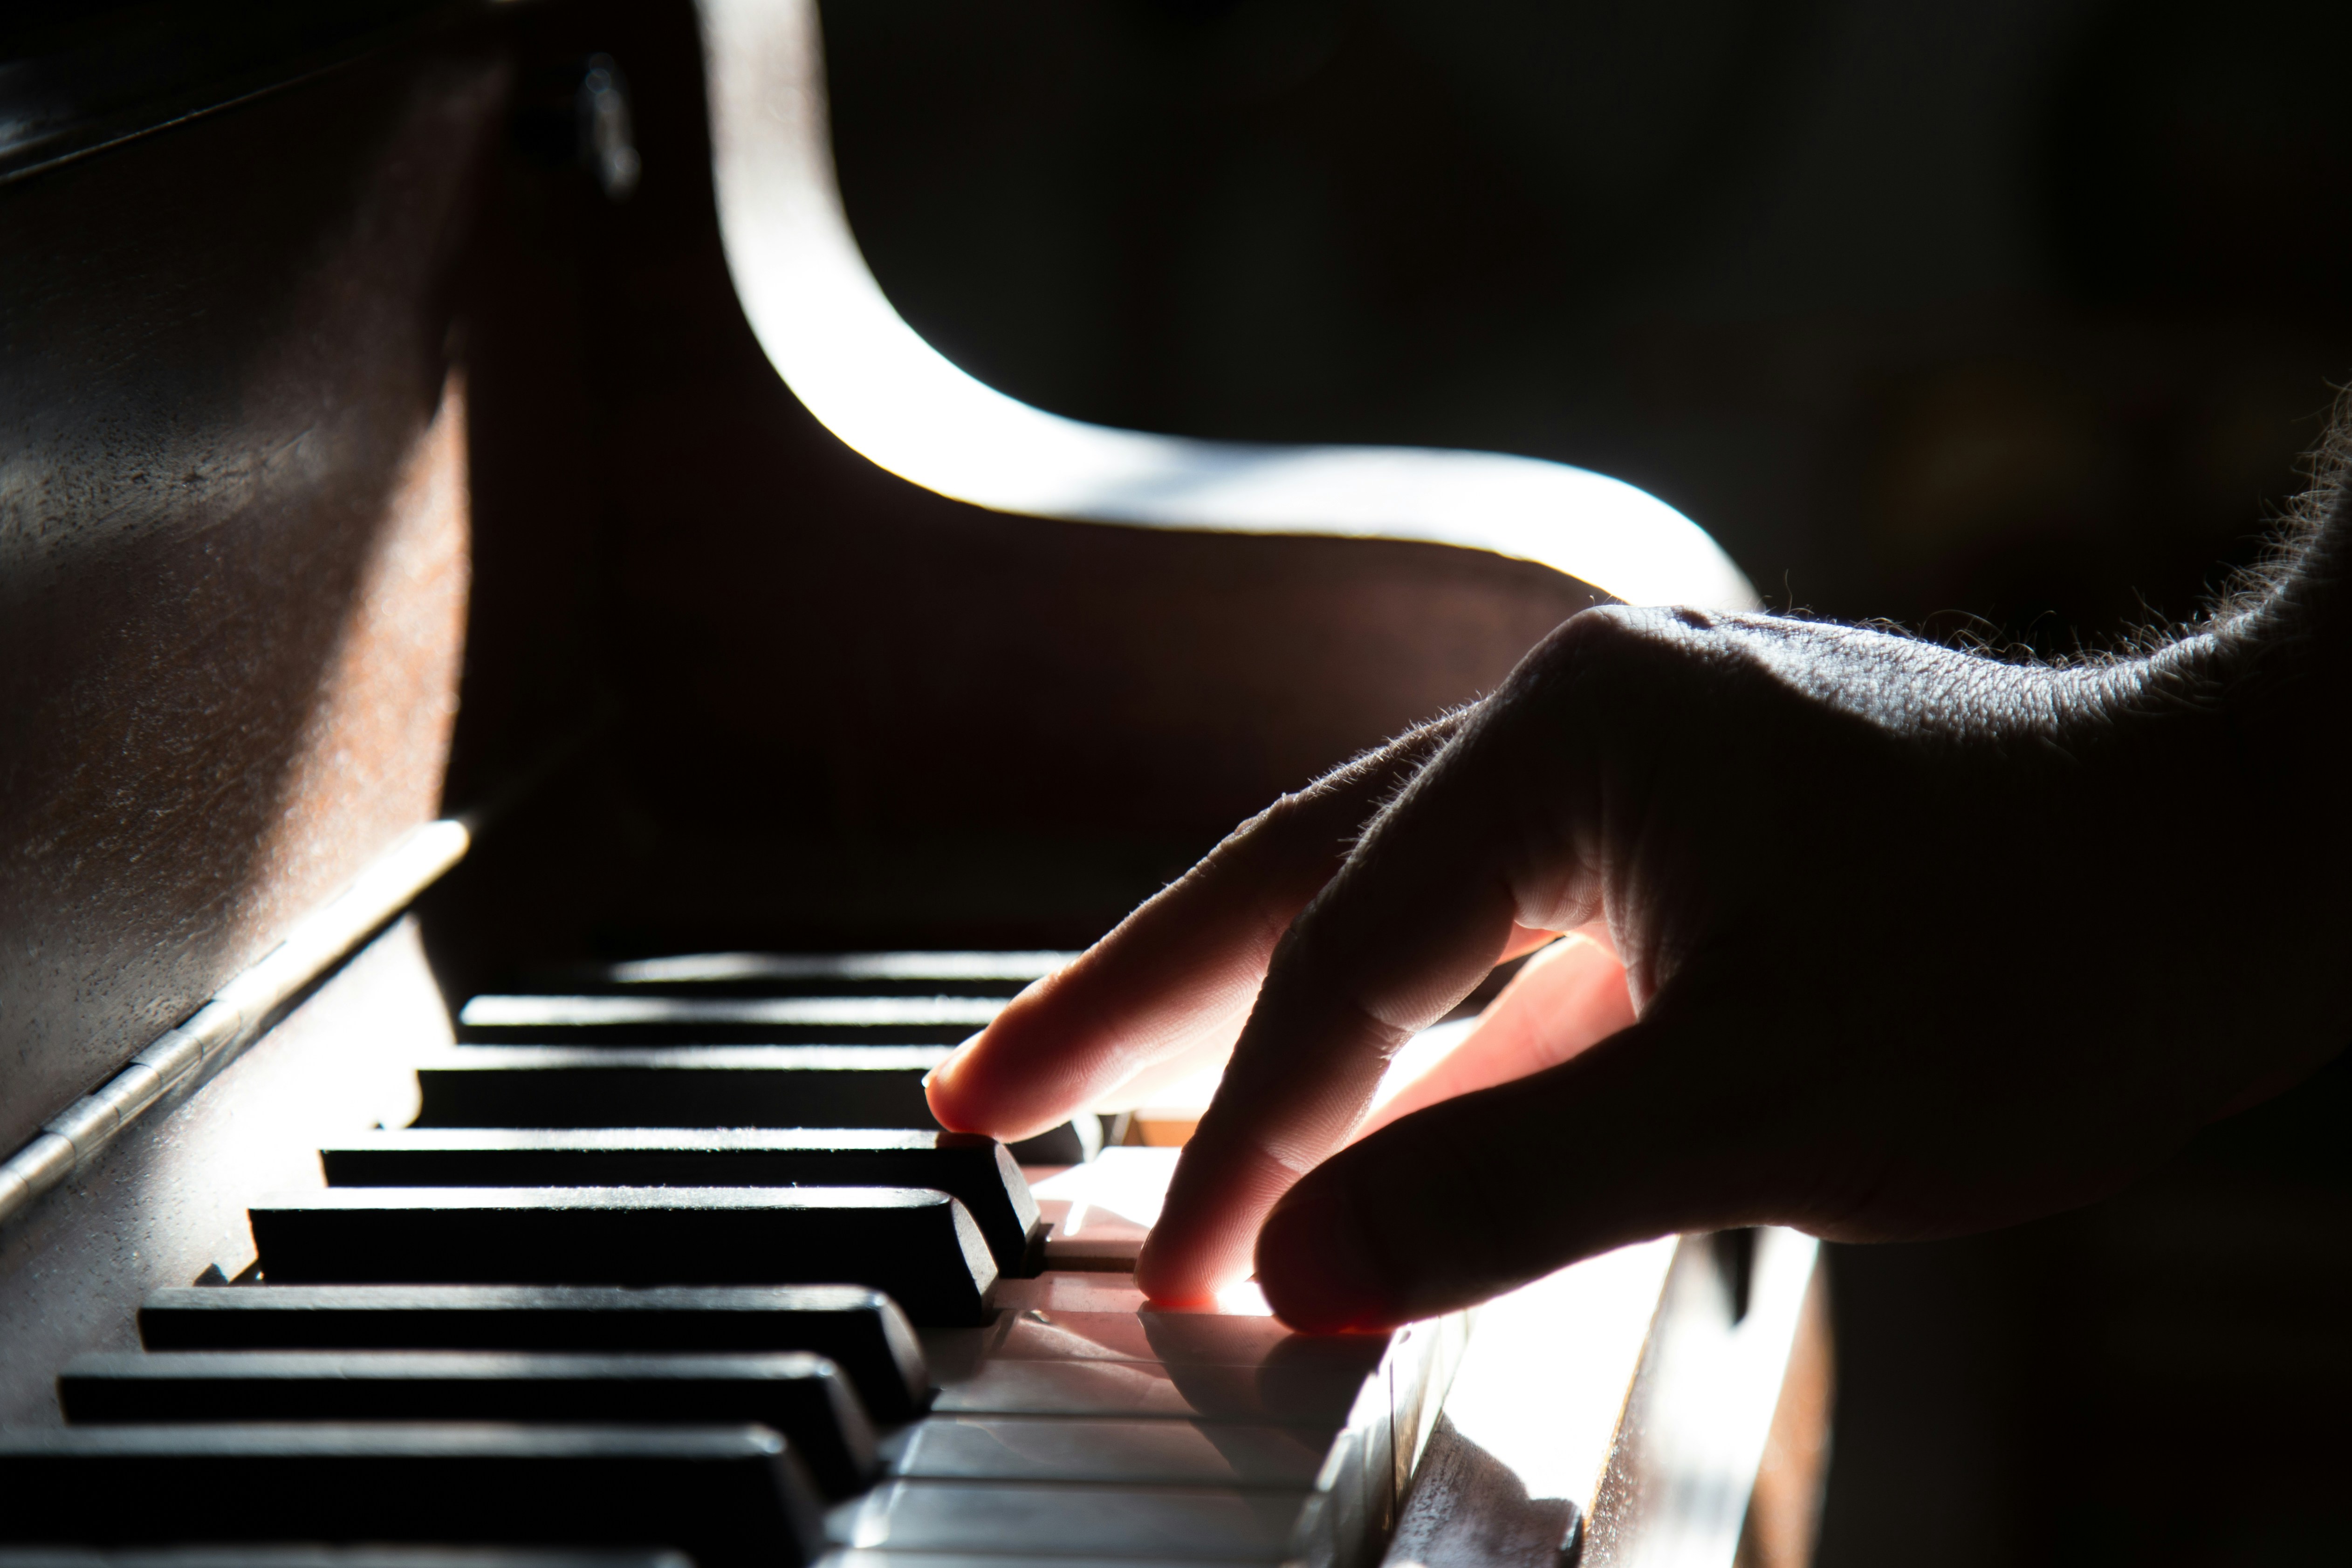 Hand presses keys on a piano